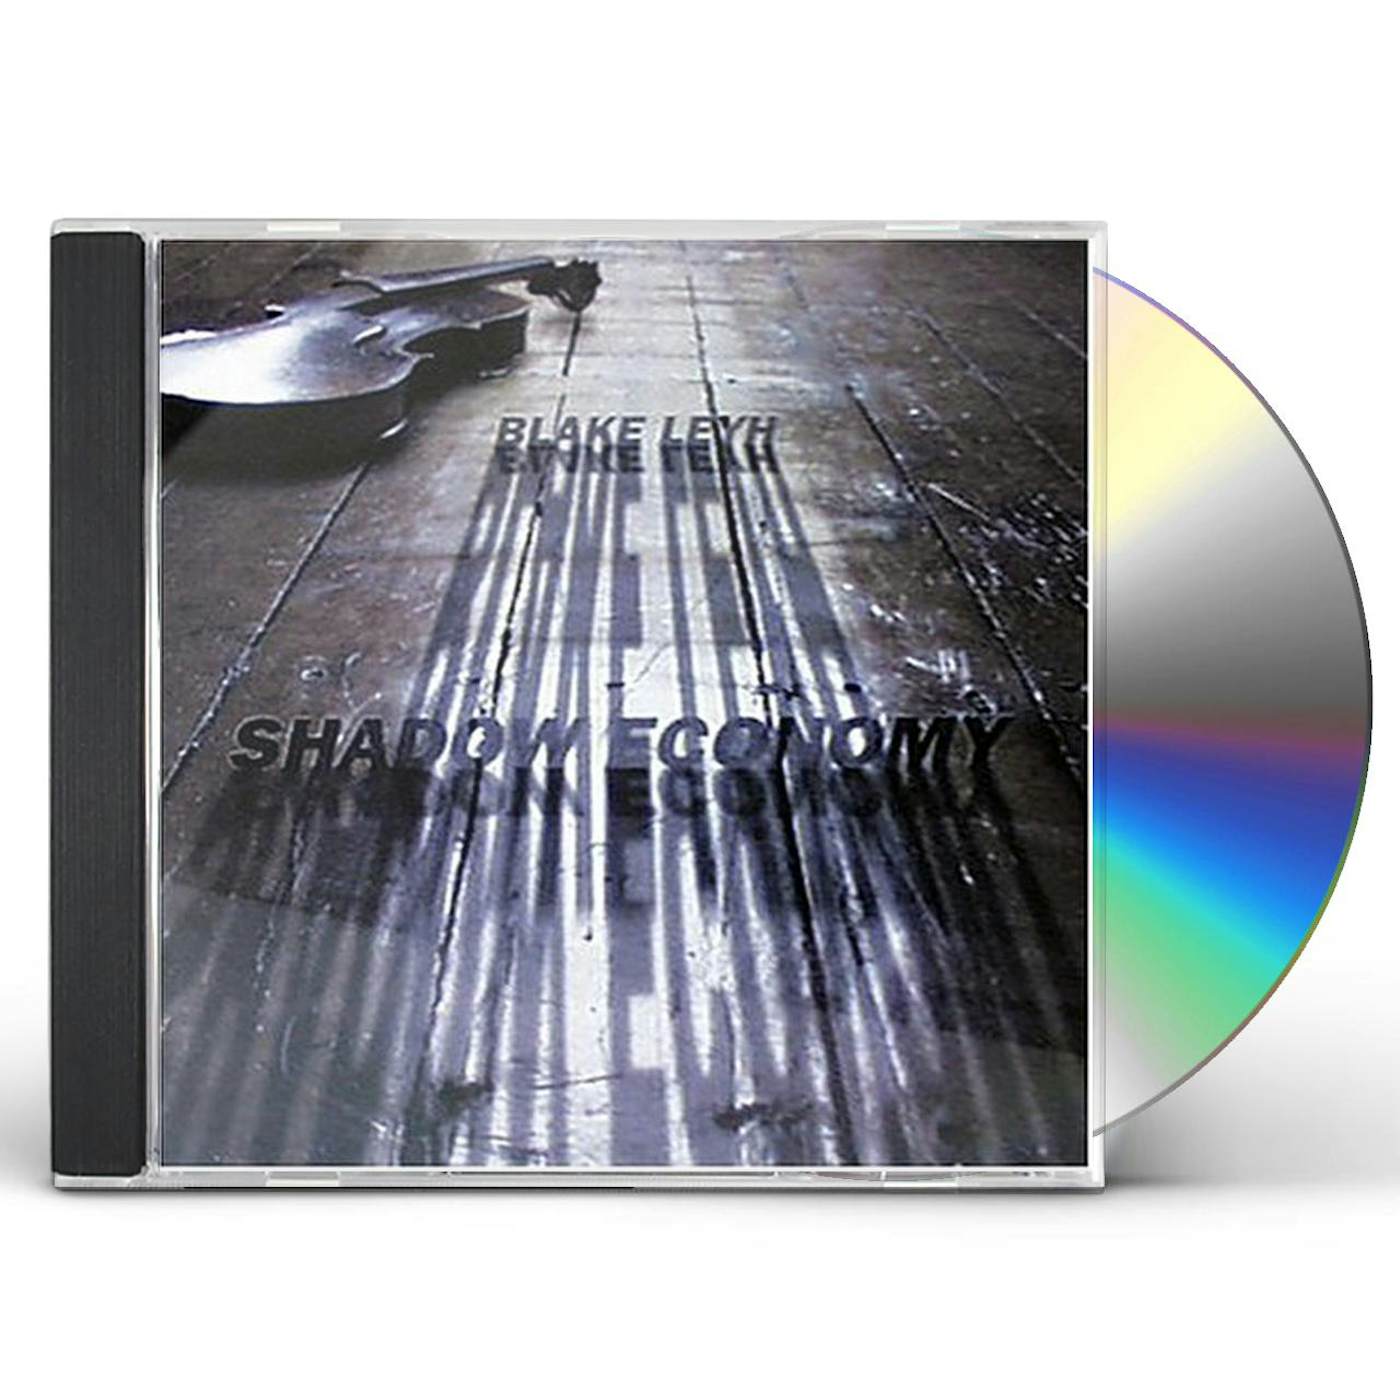 Blake Leyh SHADOW ECONOMY CD